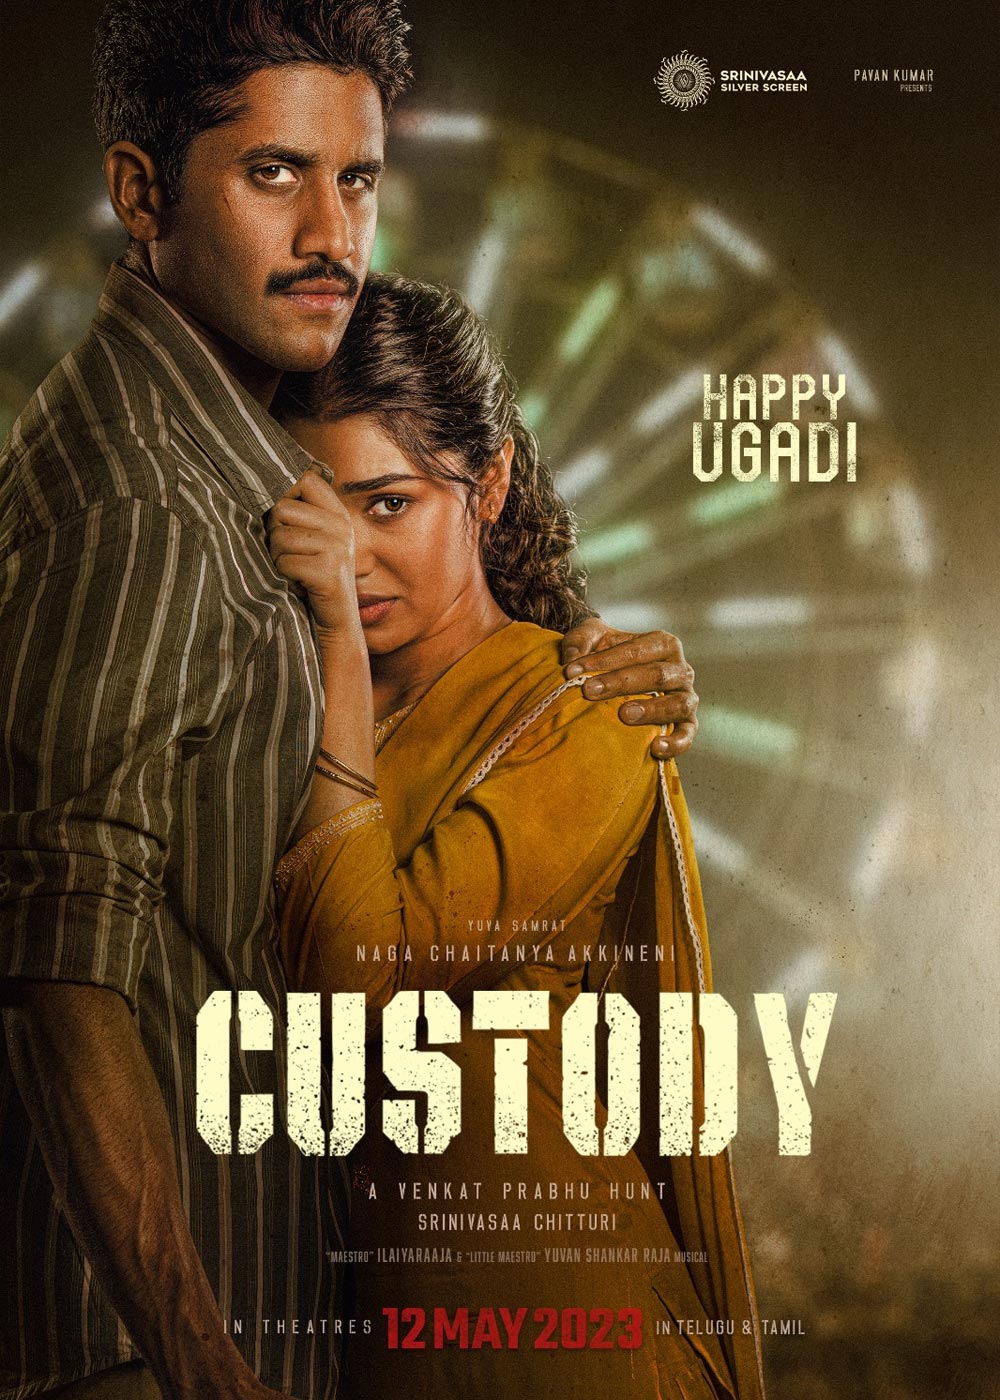 Custody Movie (2023) | Release Date, Review, Cast, Trailer - Gadgets 360